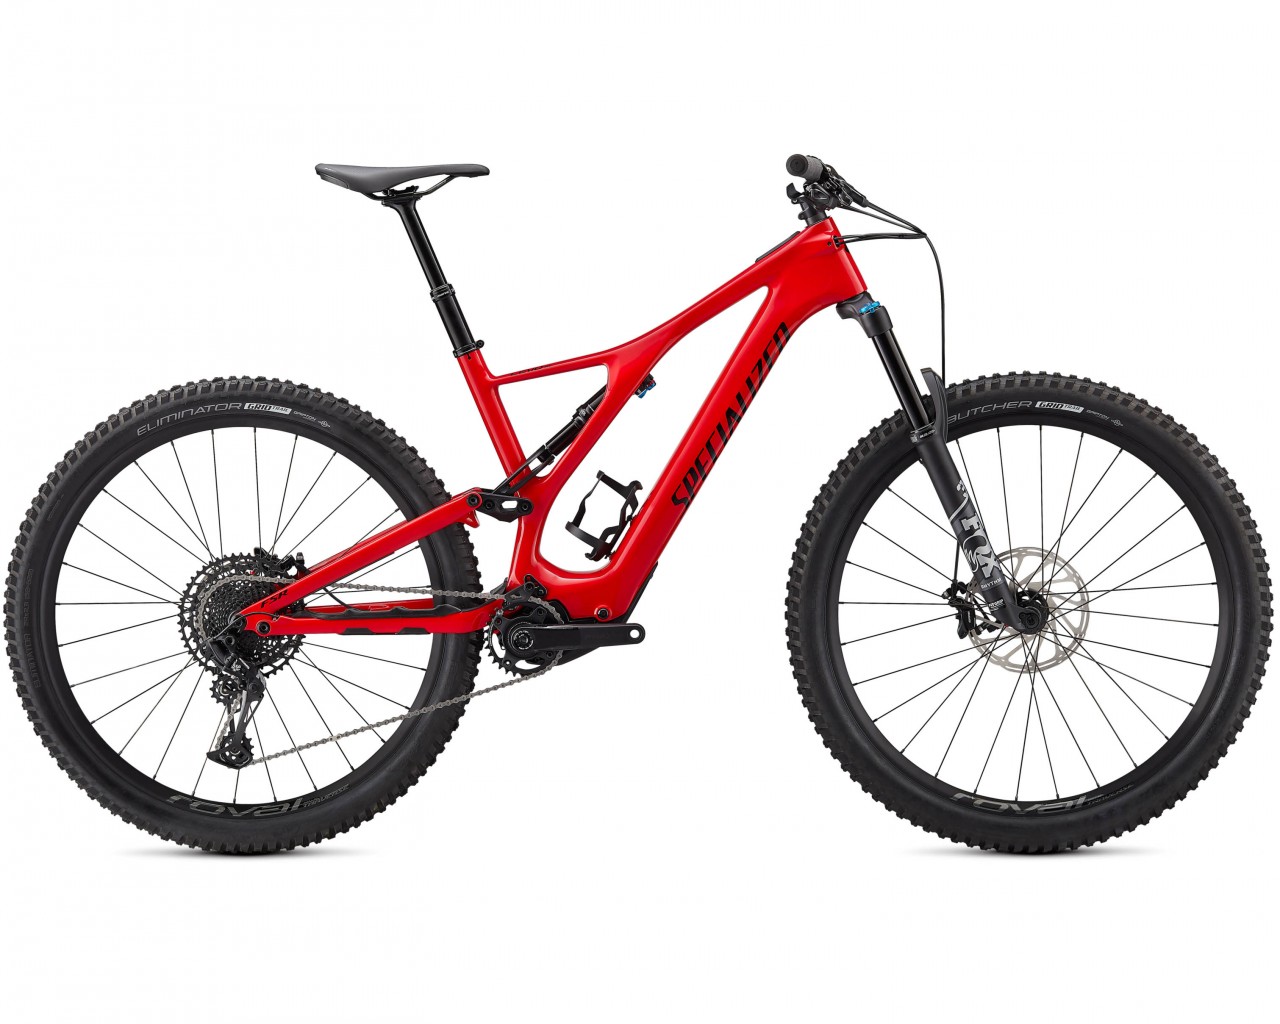 Specialized Levo SL Comp Carbon 29 - Pedelec Carbon Mountain Bike Fullsuspension 2021 | flo red-black